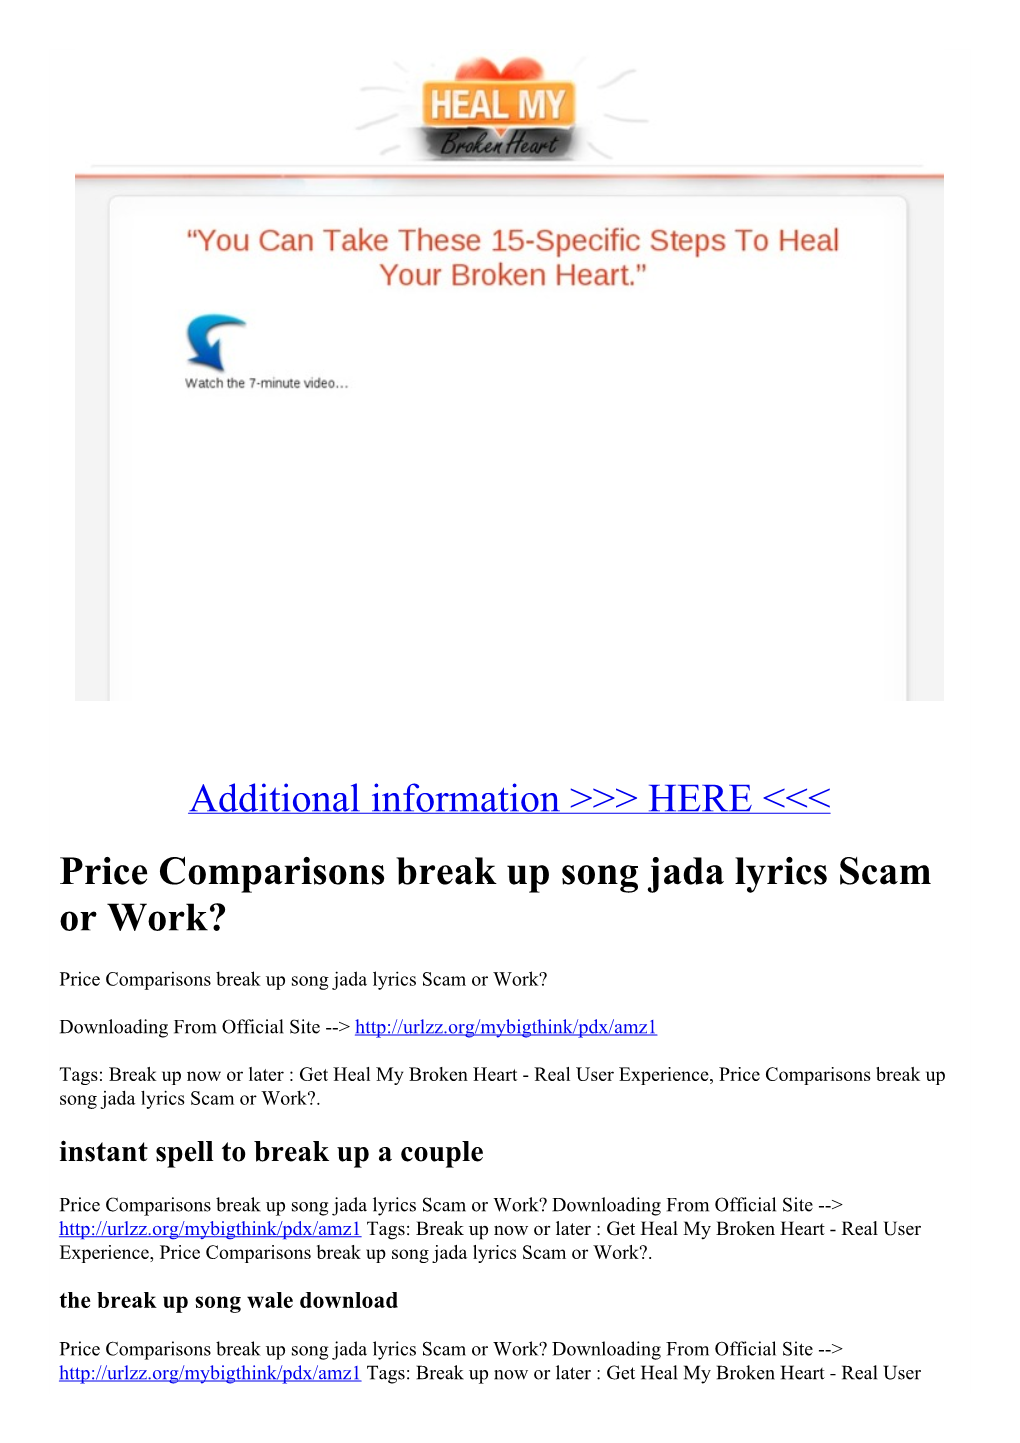 Price Comparisons Break up Song Jada Lyrics Scam Or Work?